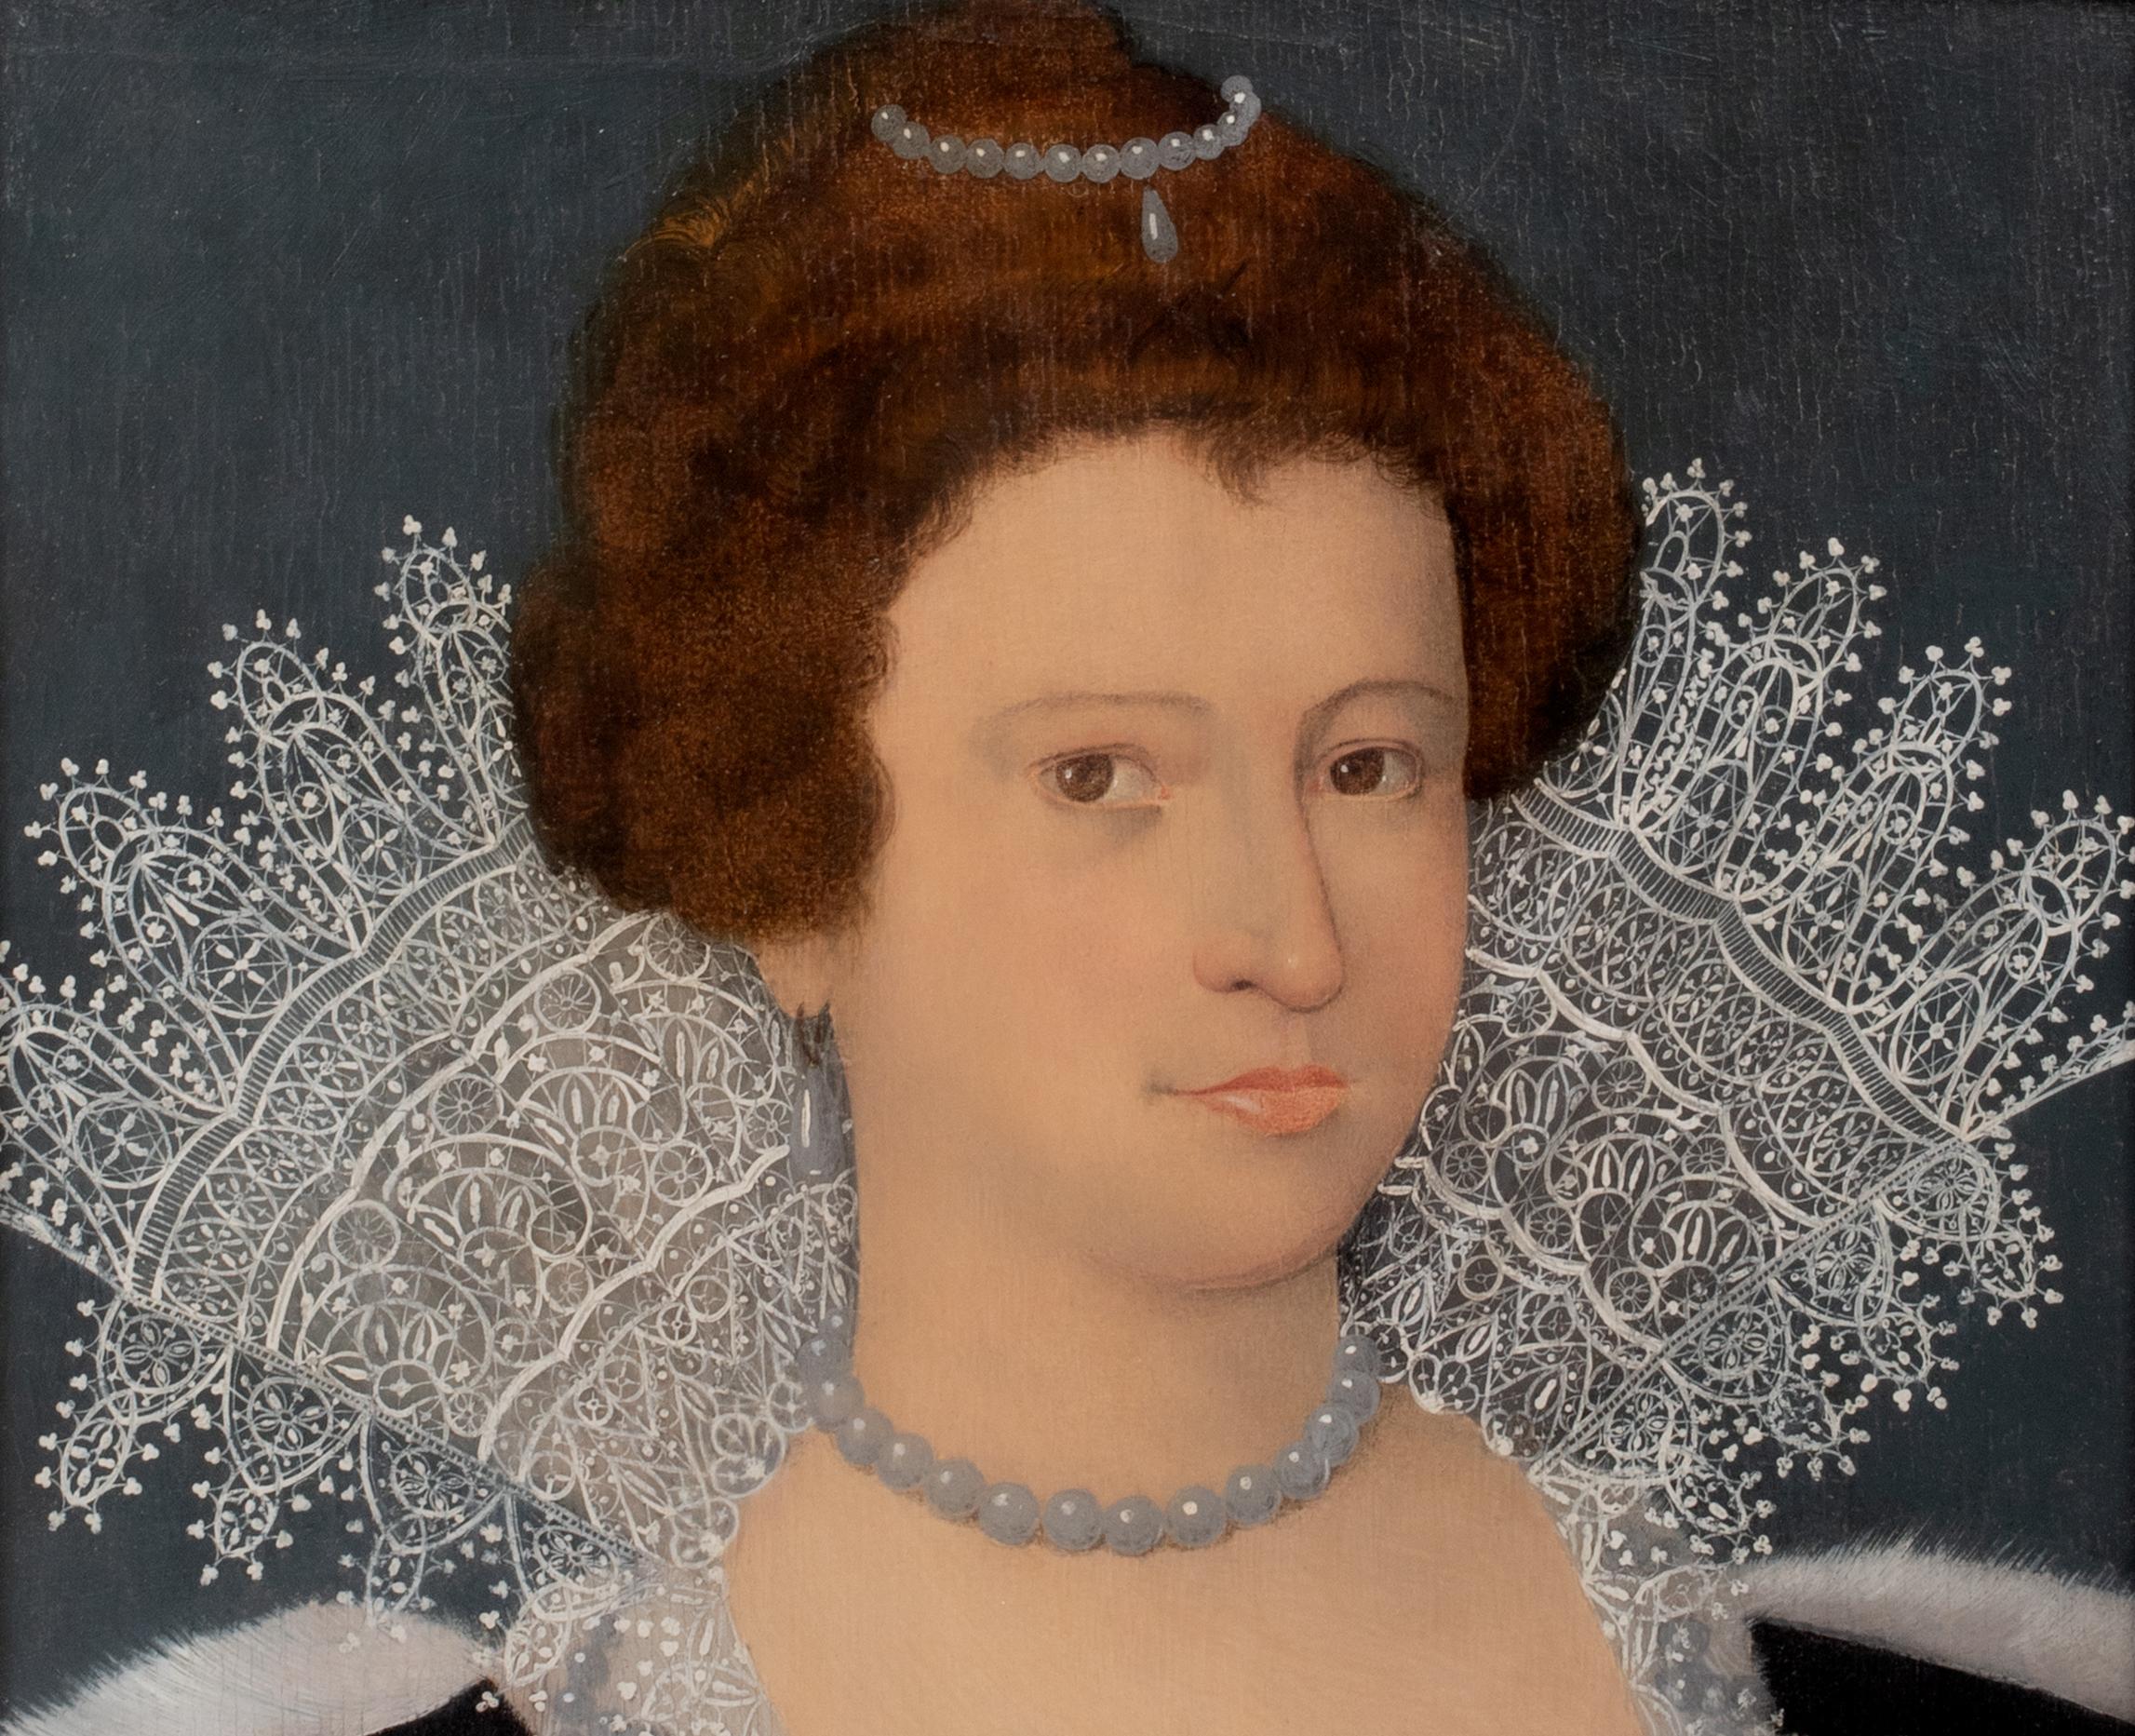 Portrait Of A Queen Elizabeth I Of England (1533-1603), 16th Century   1